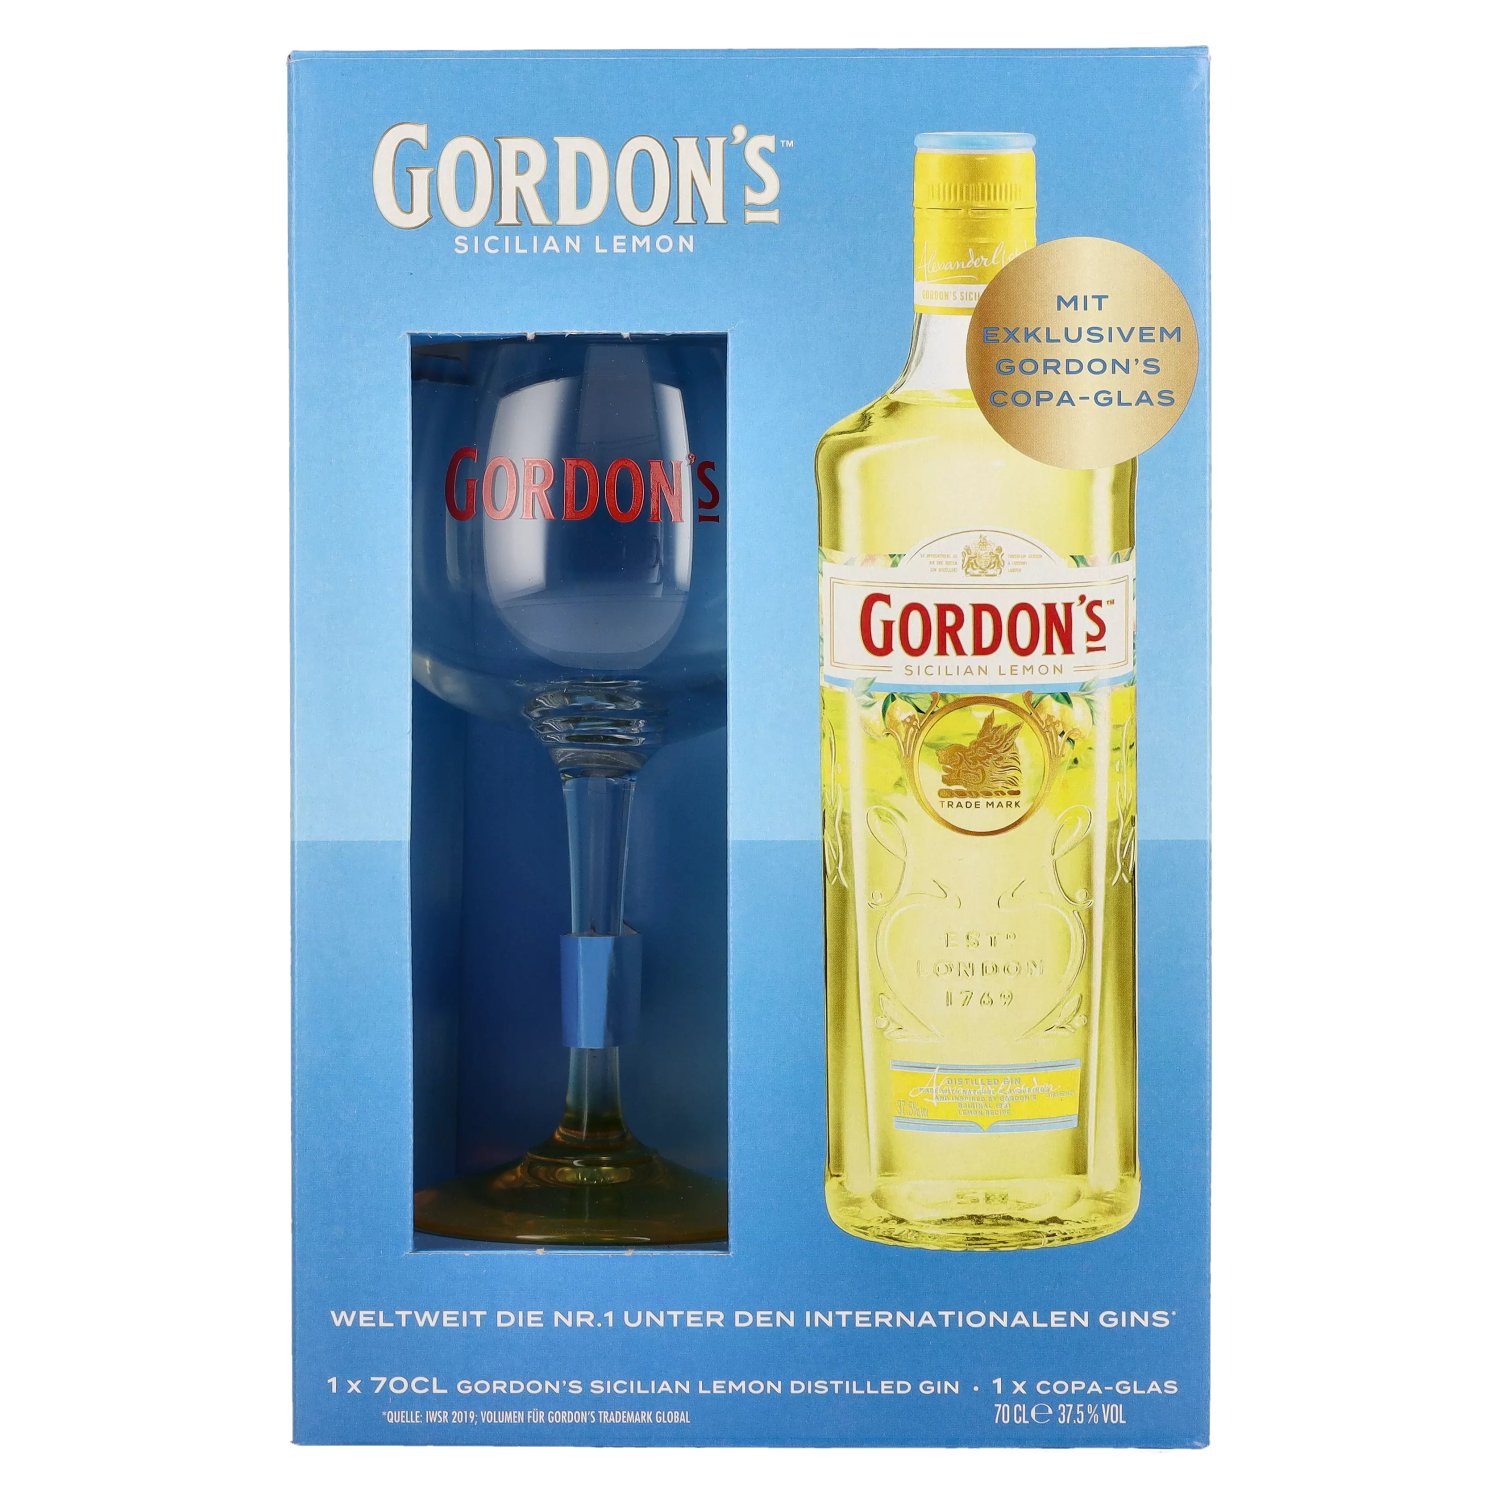 Gordon\'s SICILIAN LEMON Distilled Gin Giftbox 37,5% in 0,7l glass Vol. with